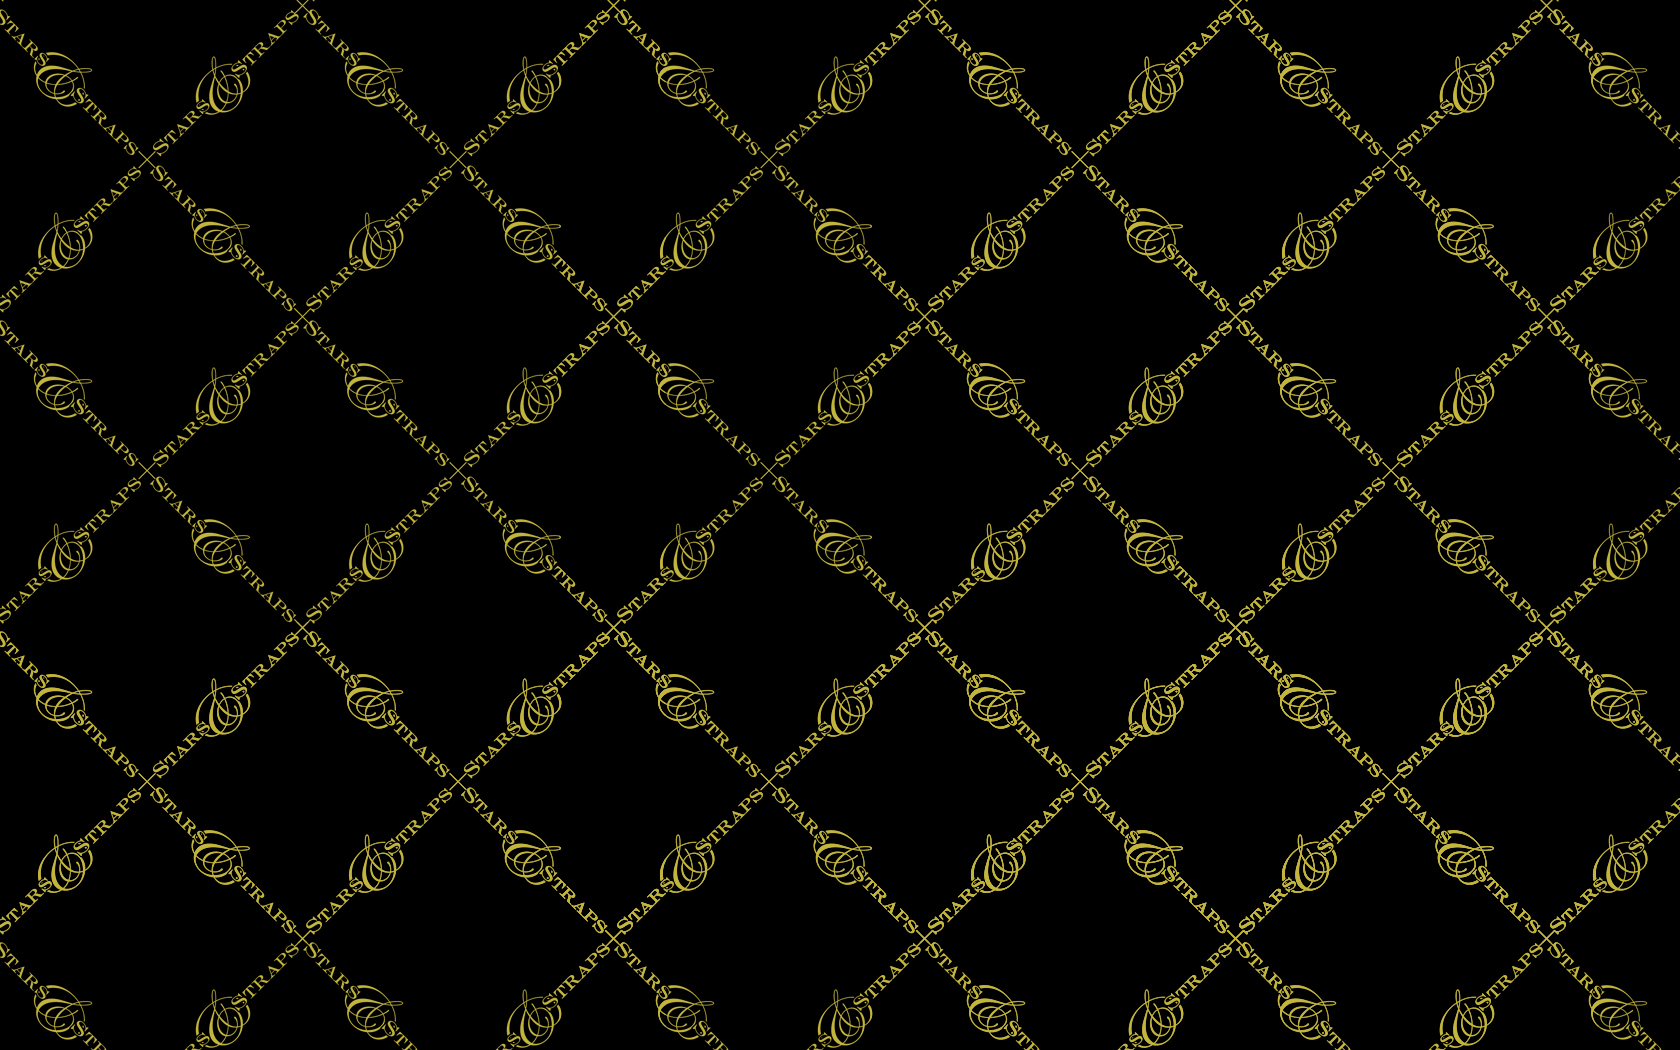 Gold And Black Wallpaper Grasscloth